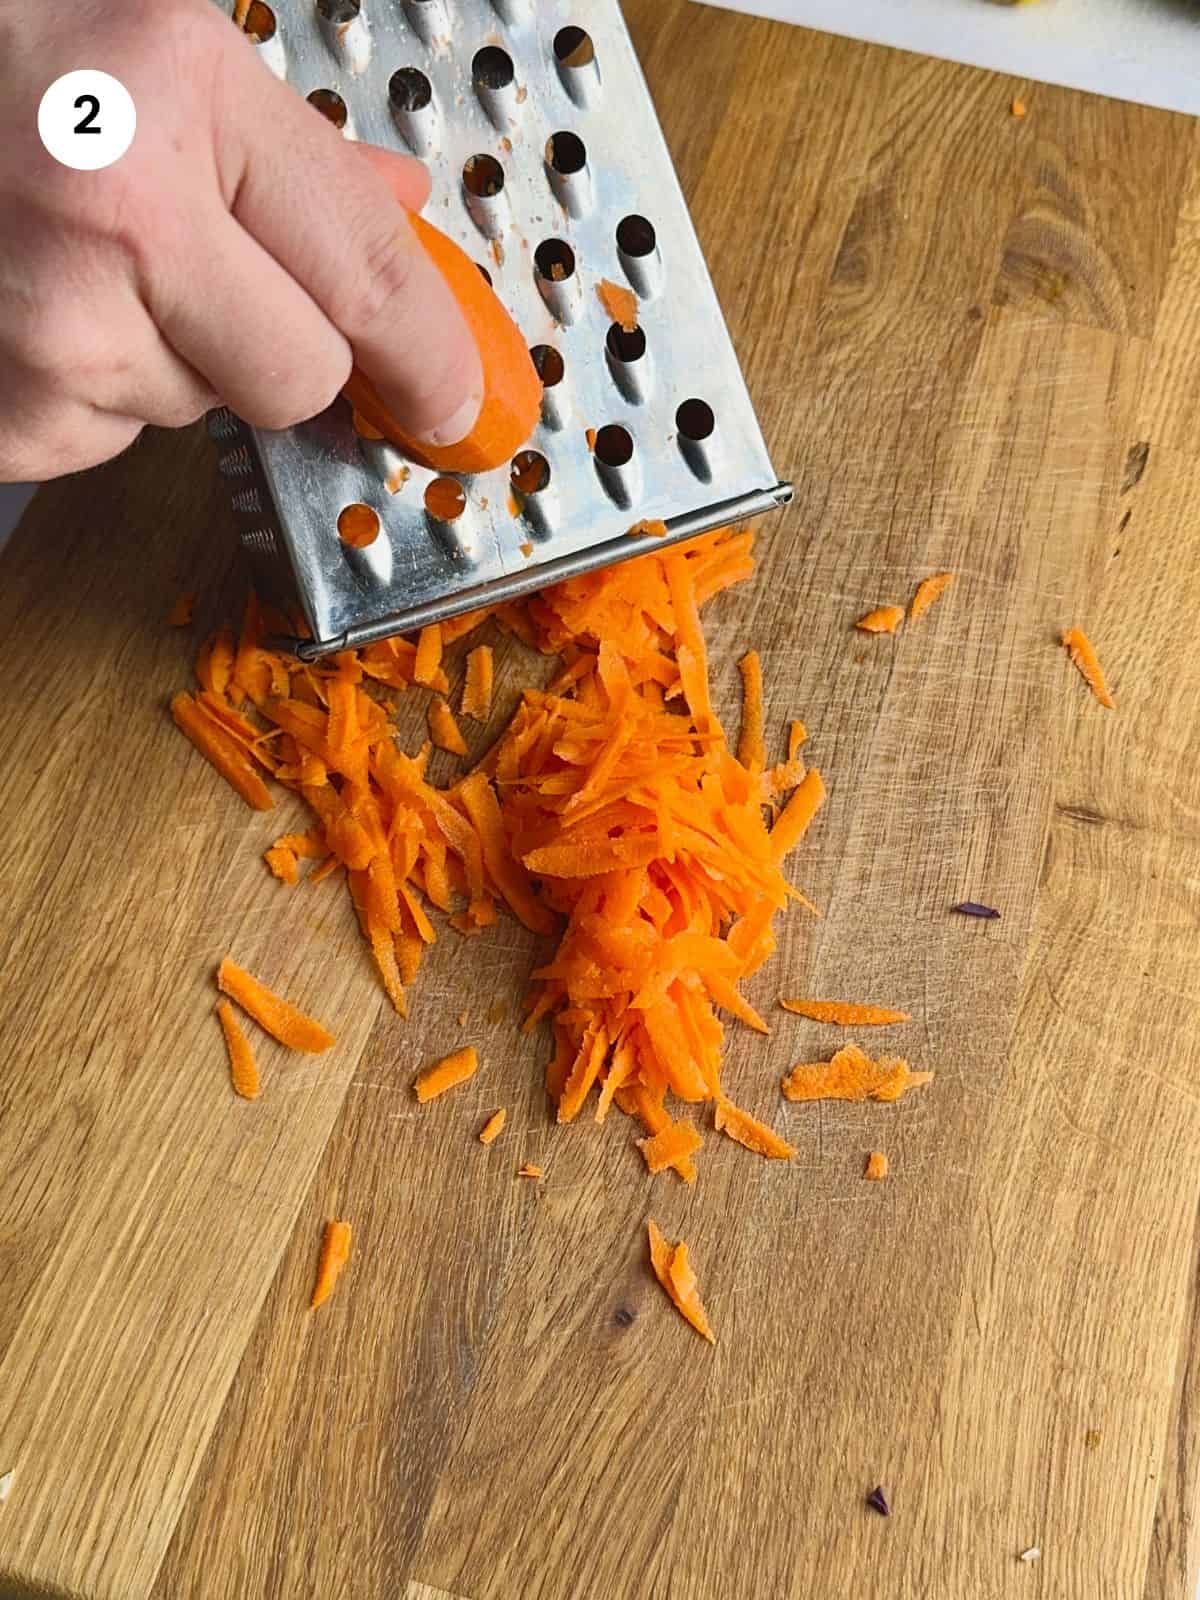 Grating the carrot for lahanosalata.